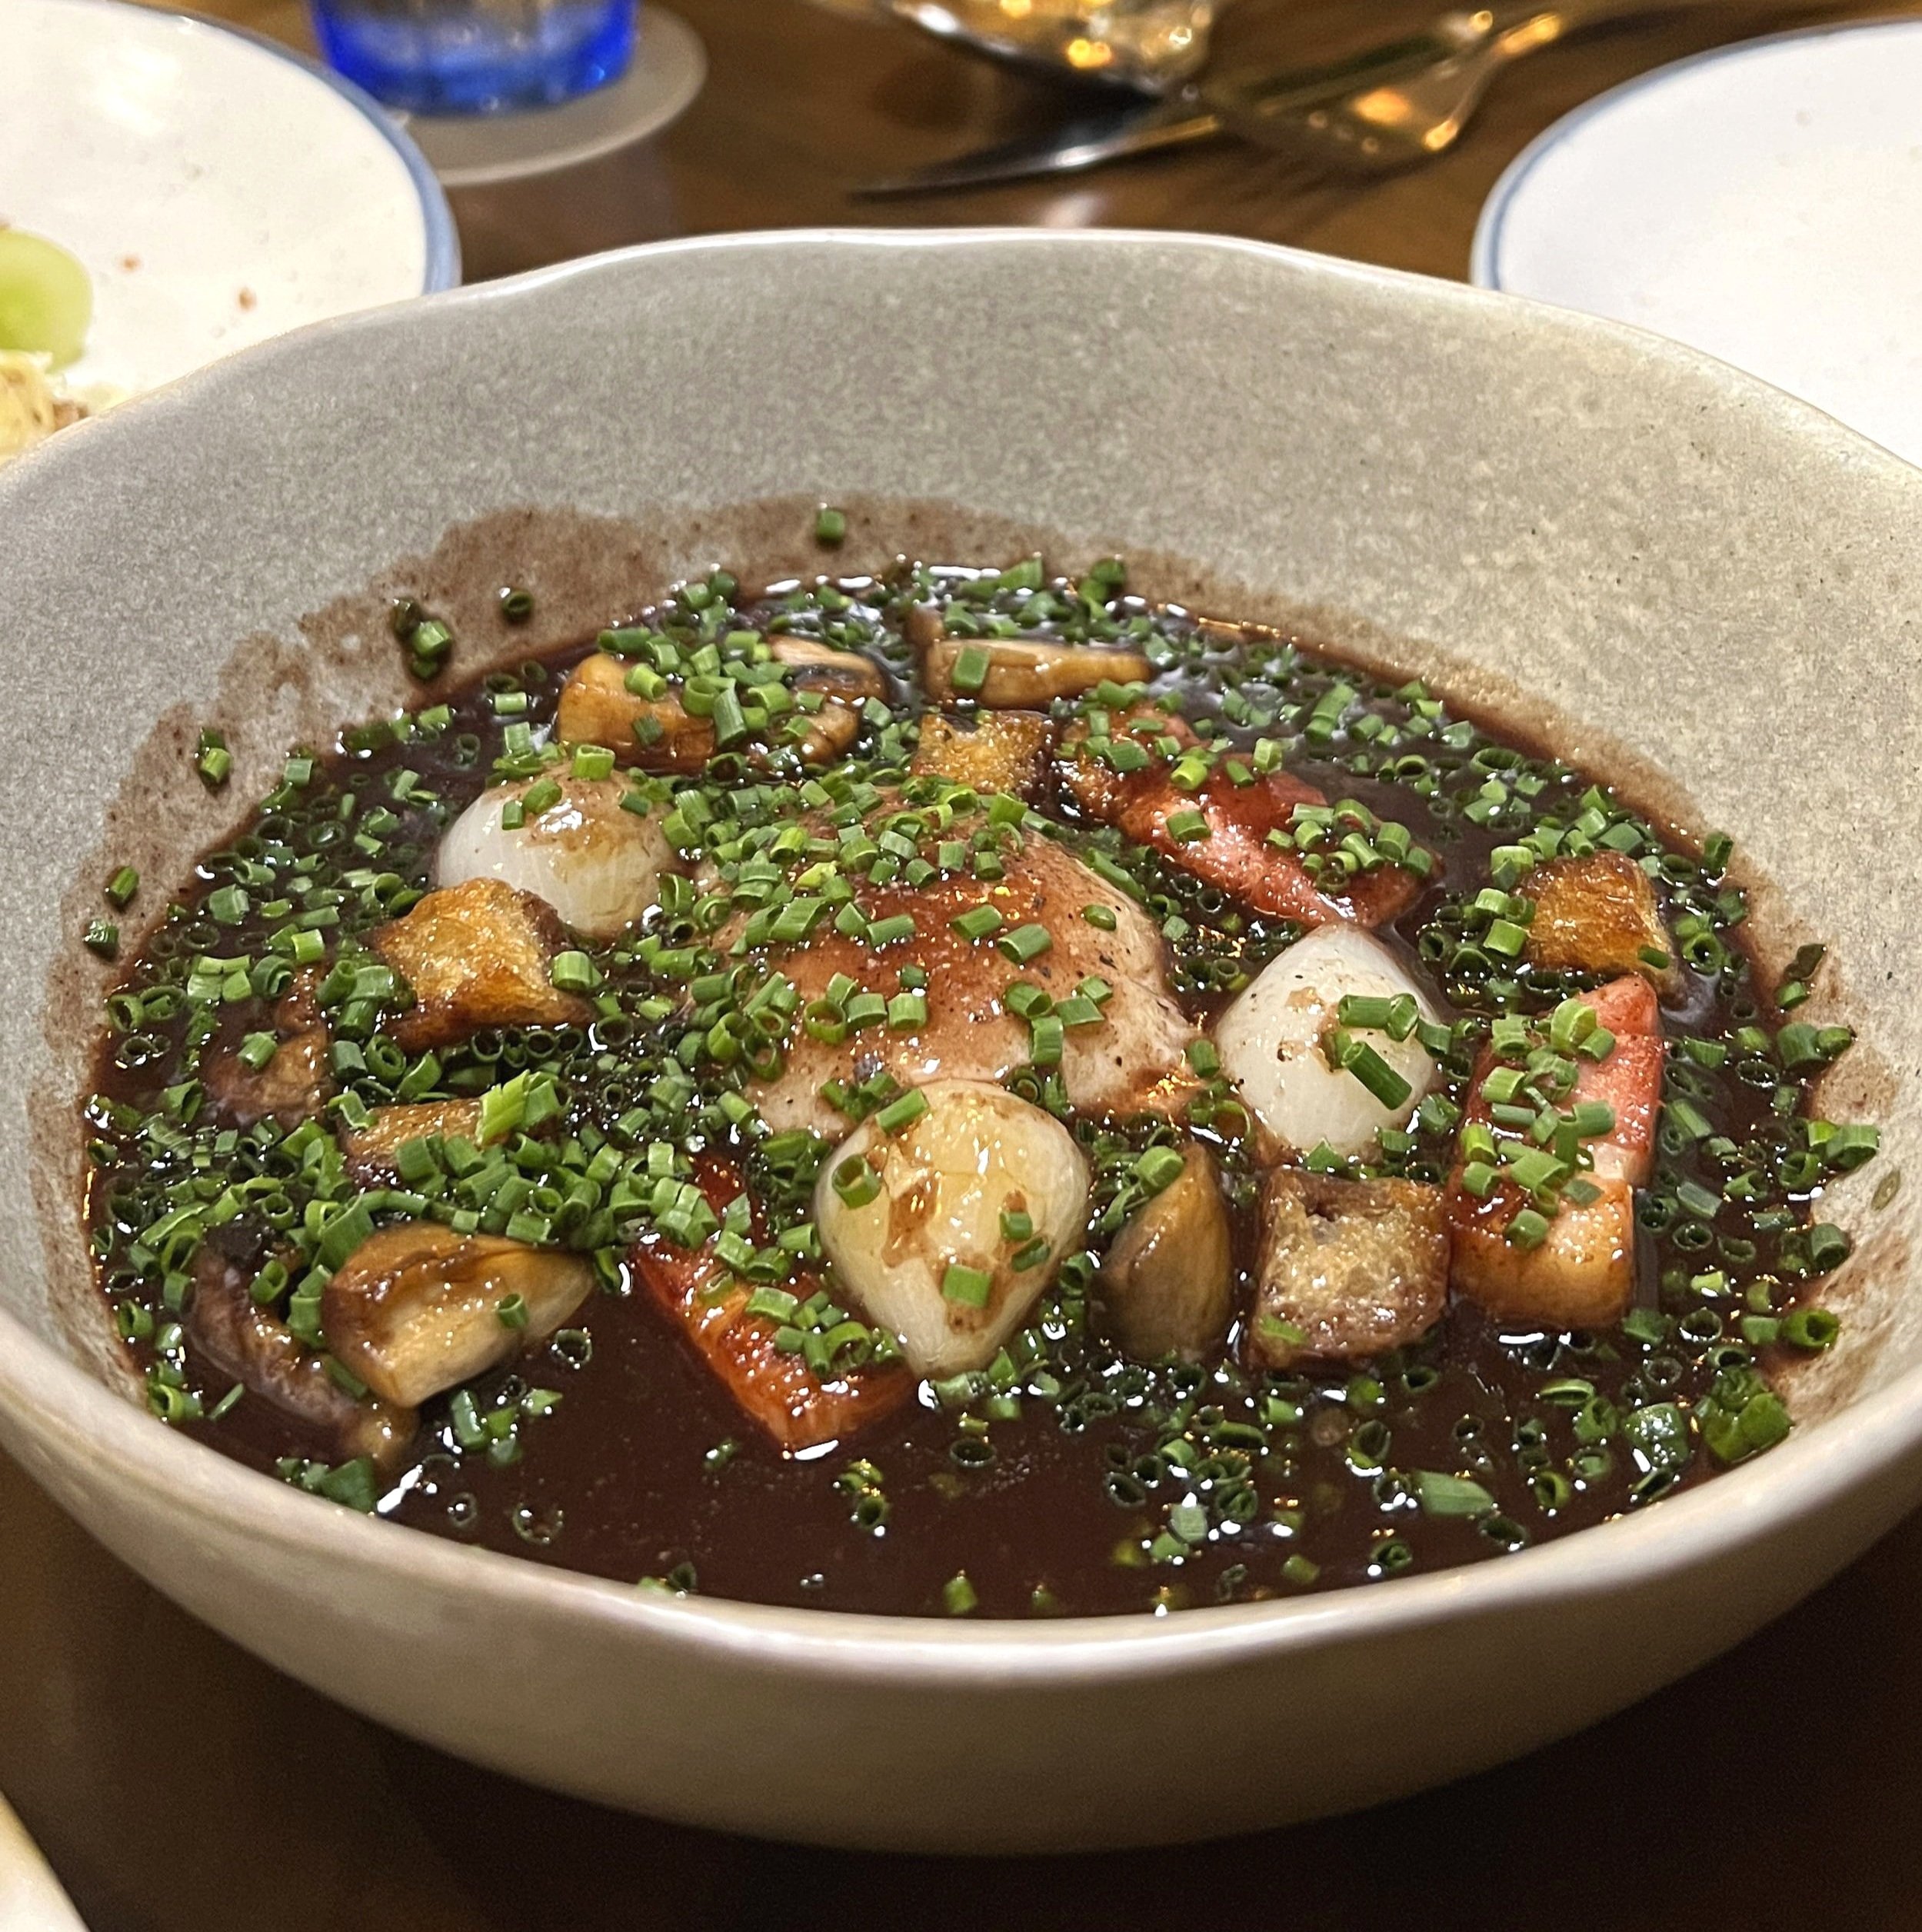 Gaston Burgundy Restaurant Singapore review